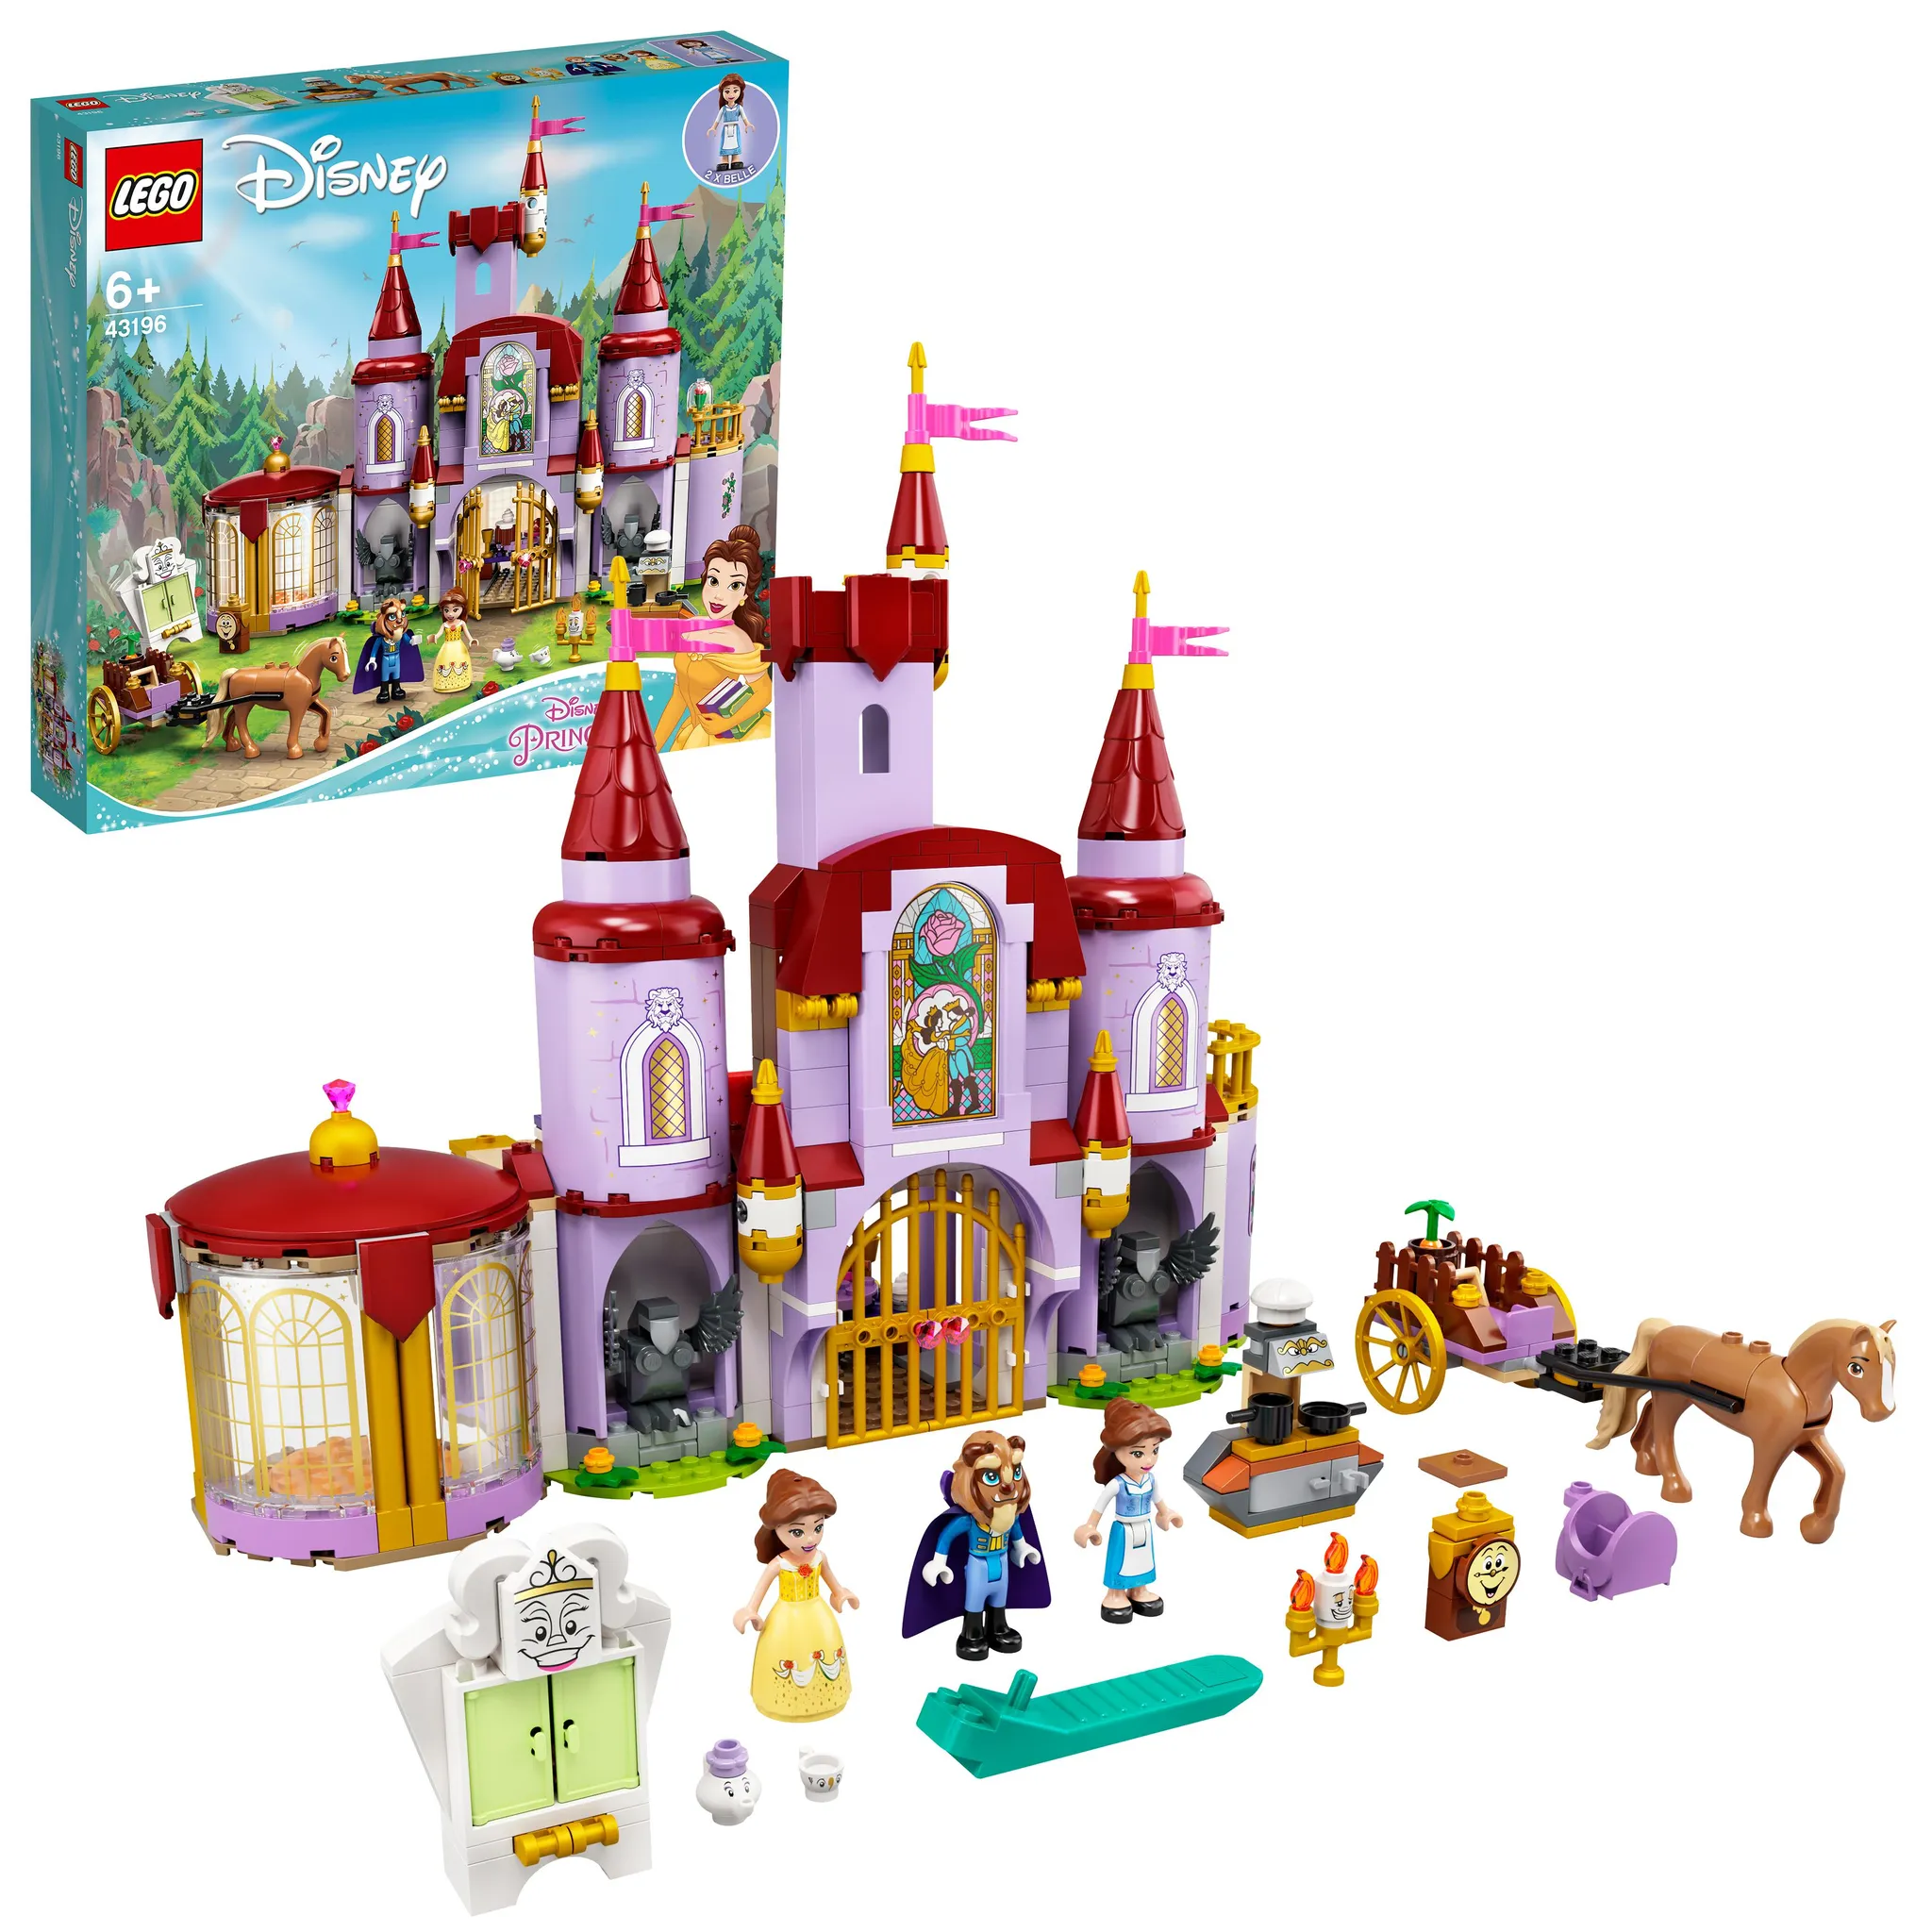 Disney Princess Schloss, 43196 LEGO Belles